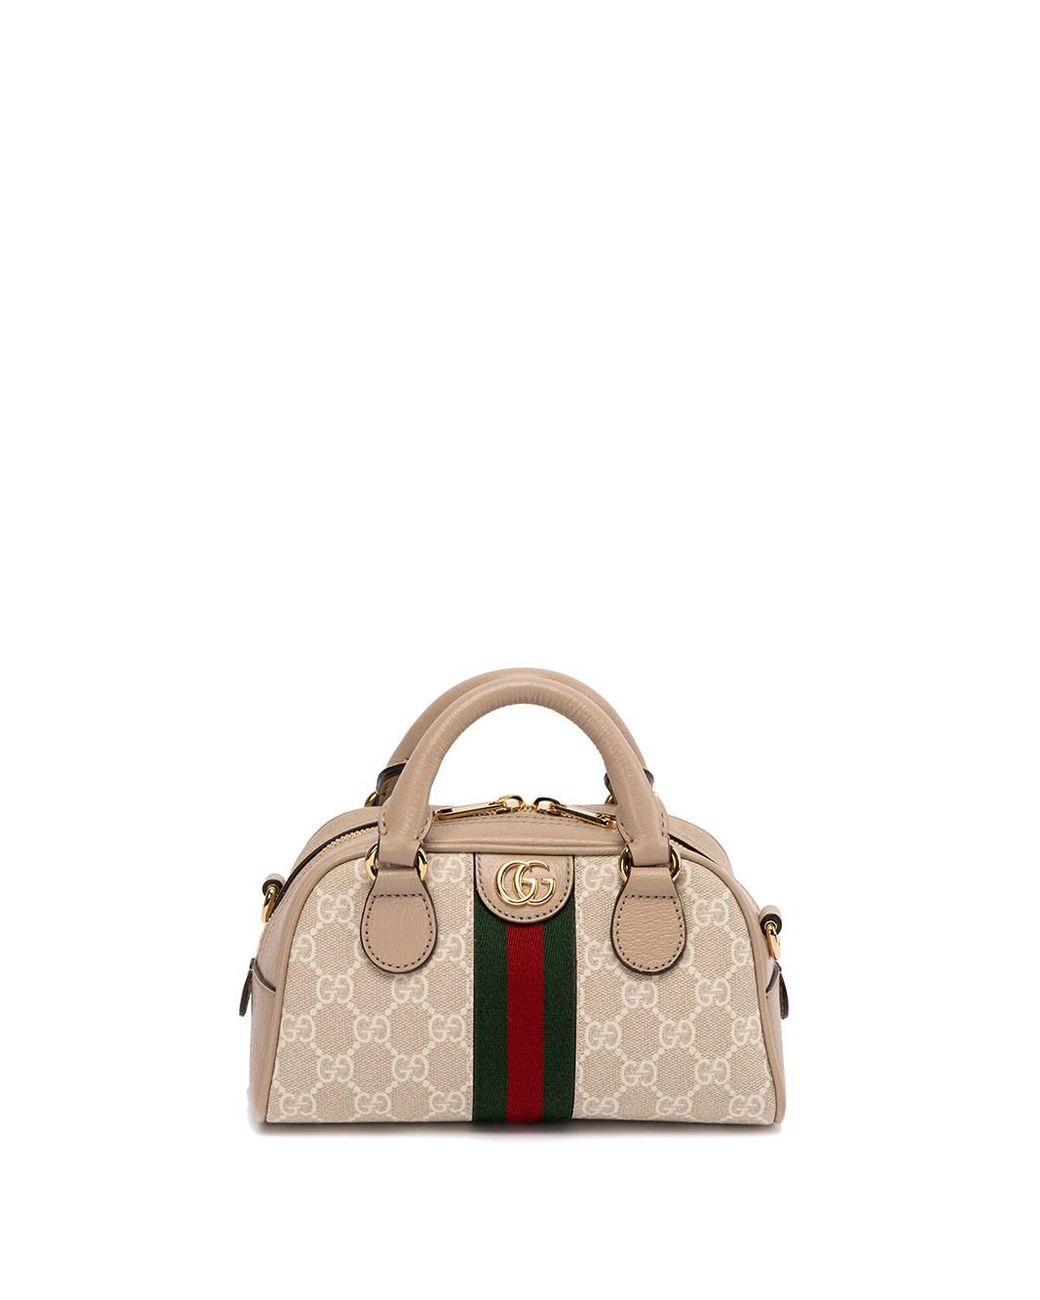 Gucci Ophidia GG Monogram Top Handle Bag Tote New Authentic Handbag Purse ❤️